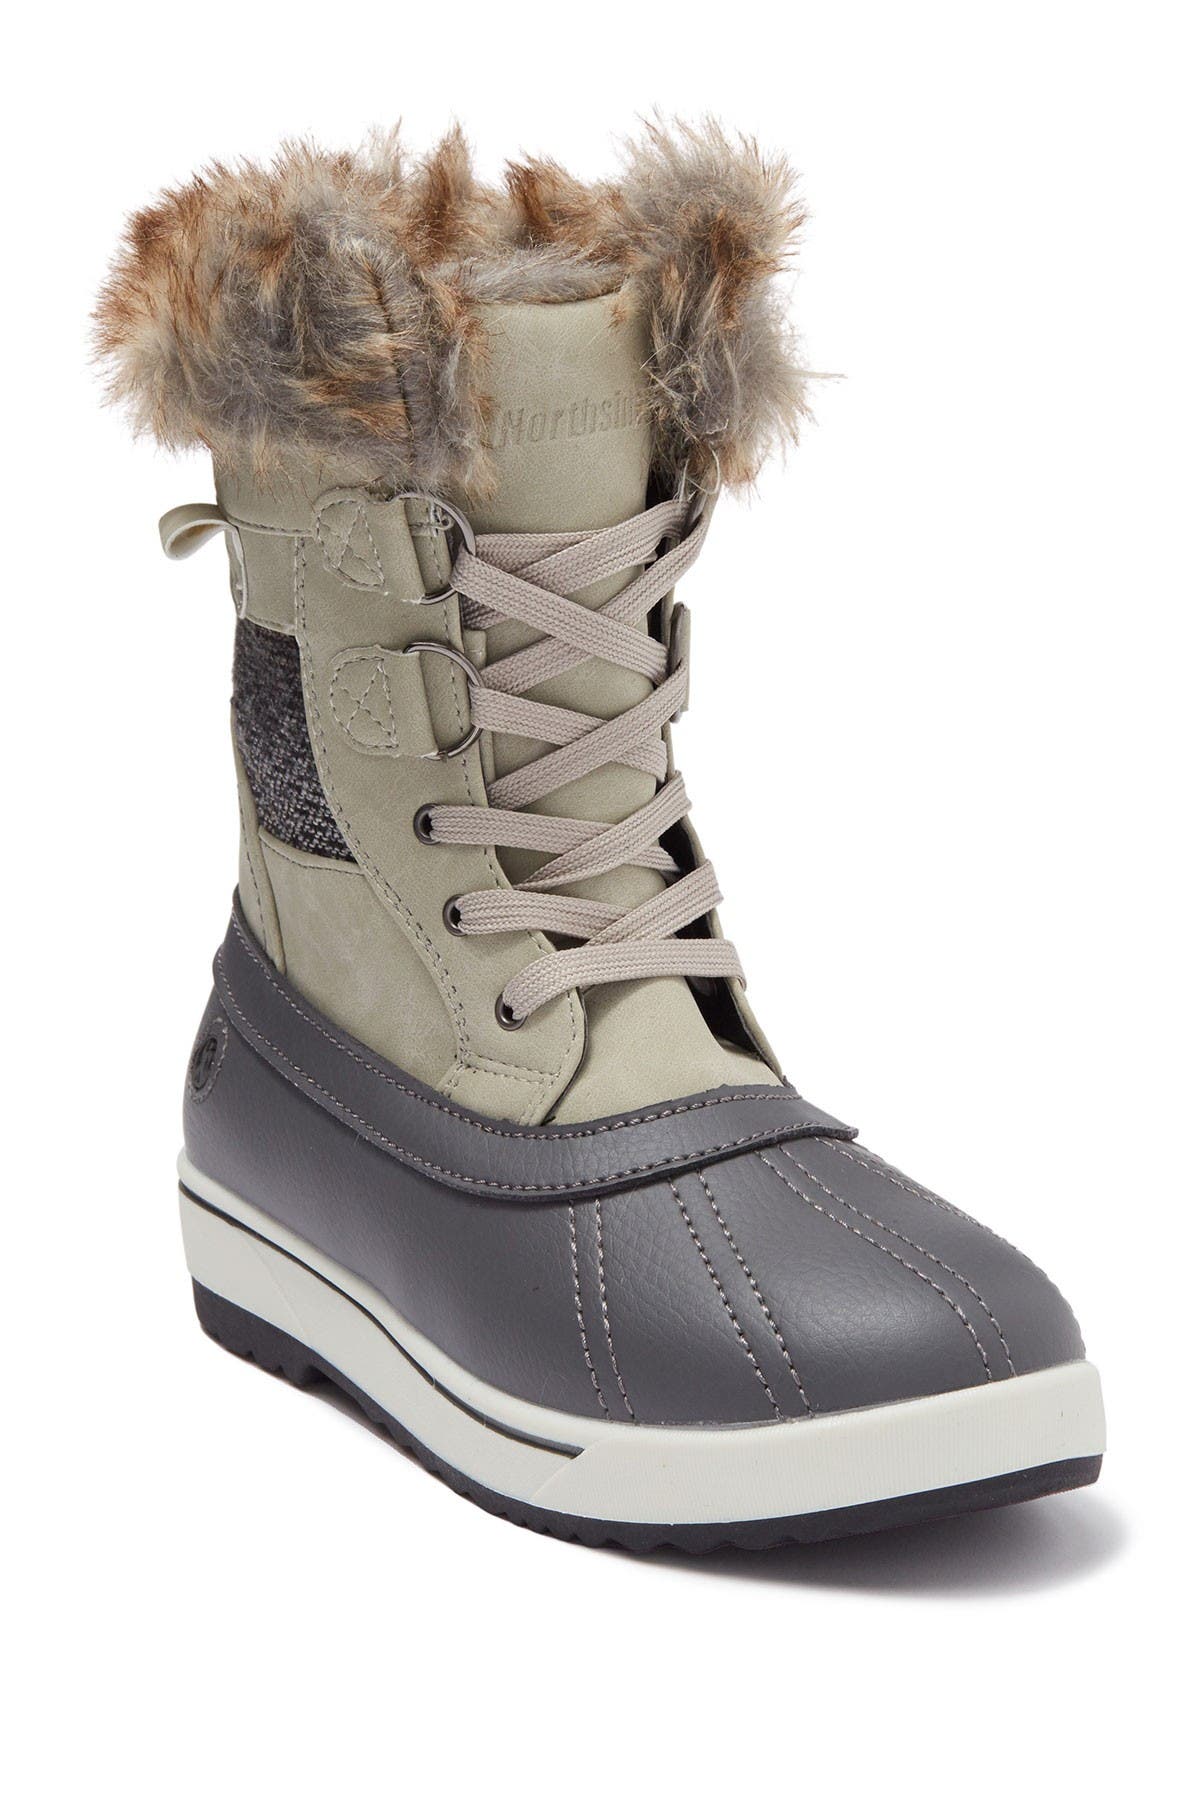 grey wide width boots